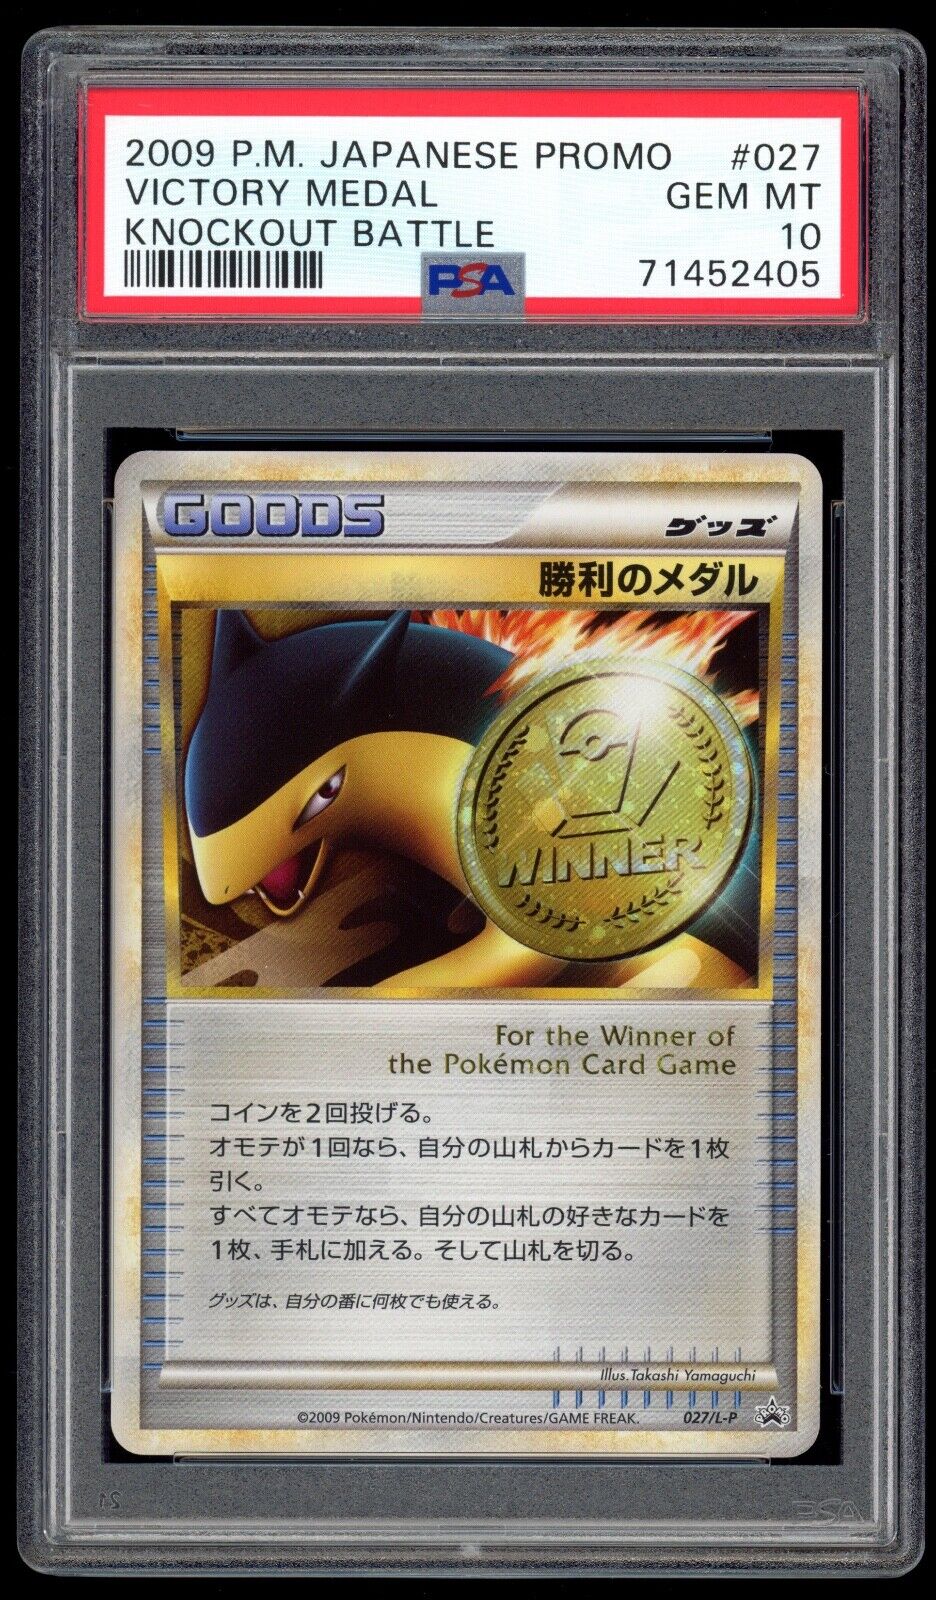 2009 PSA 10 Gem Mint Typhlosion Victory Medal Japanese Promo Pokemon Card 27/L-P